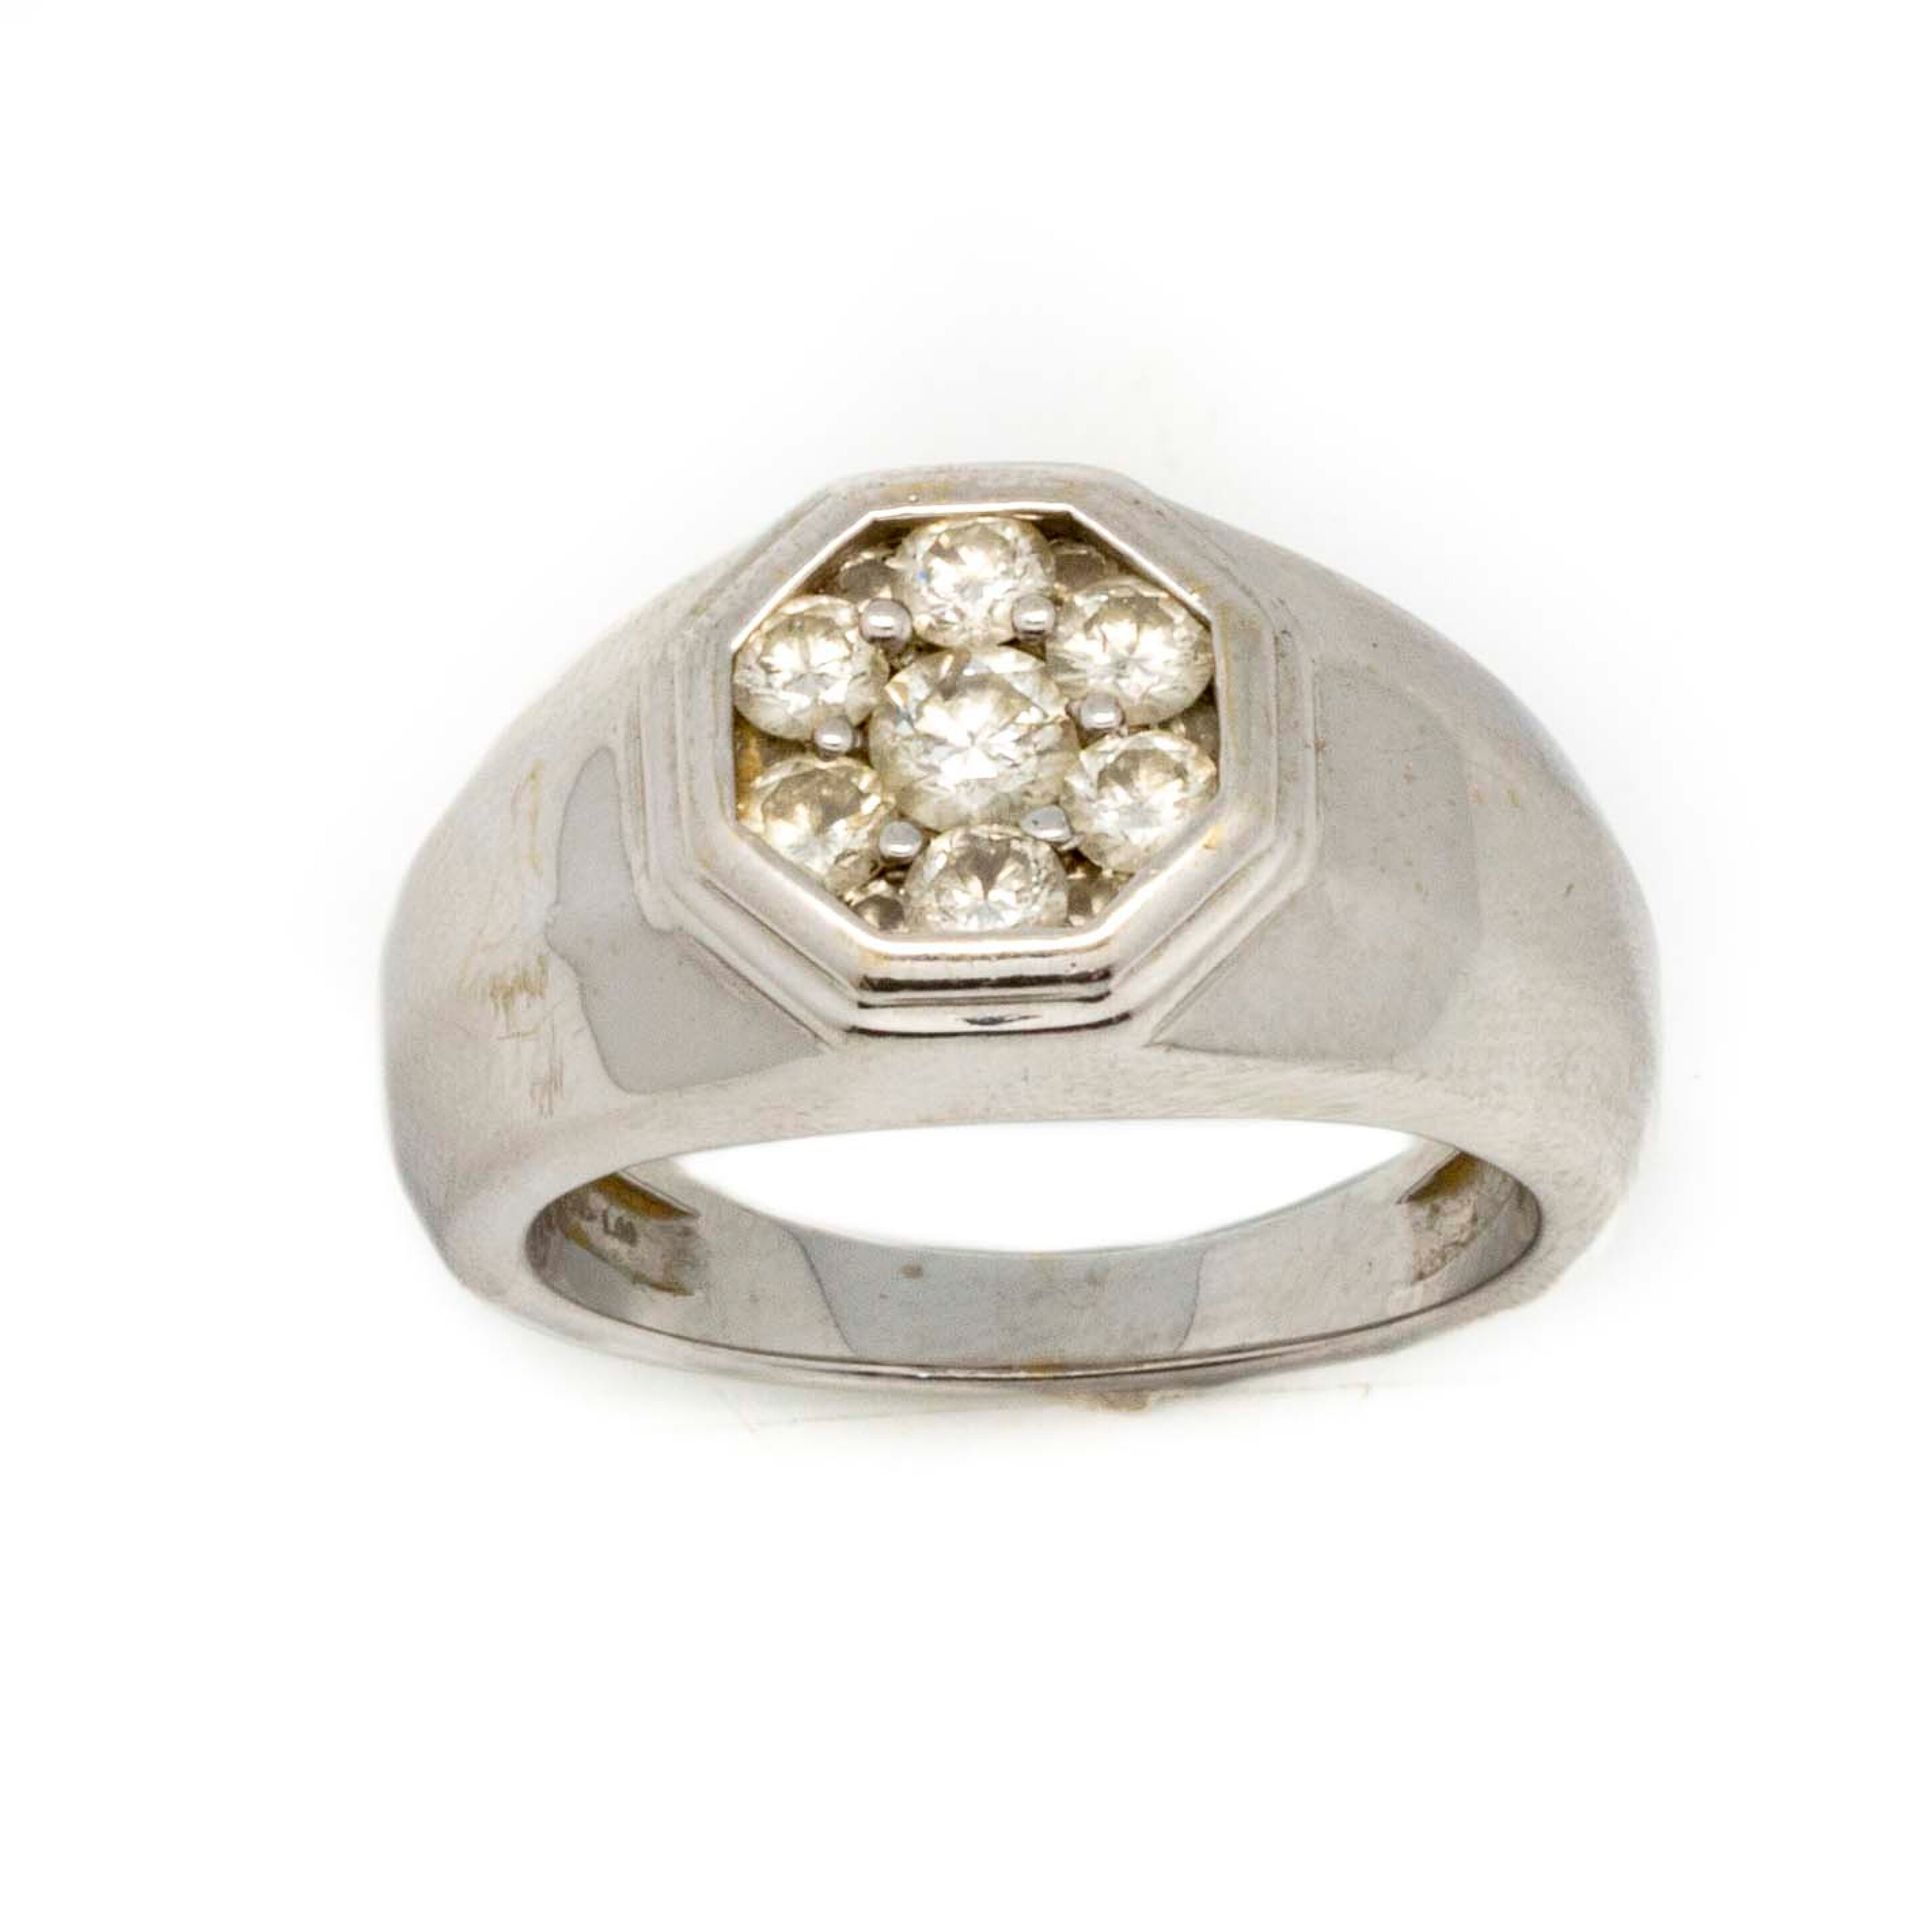 Null 镶嵌小钻石的白金标志戒指

TDD : 56

毛重：13.4克。